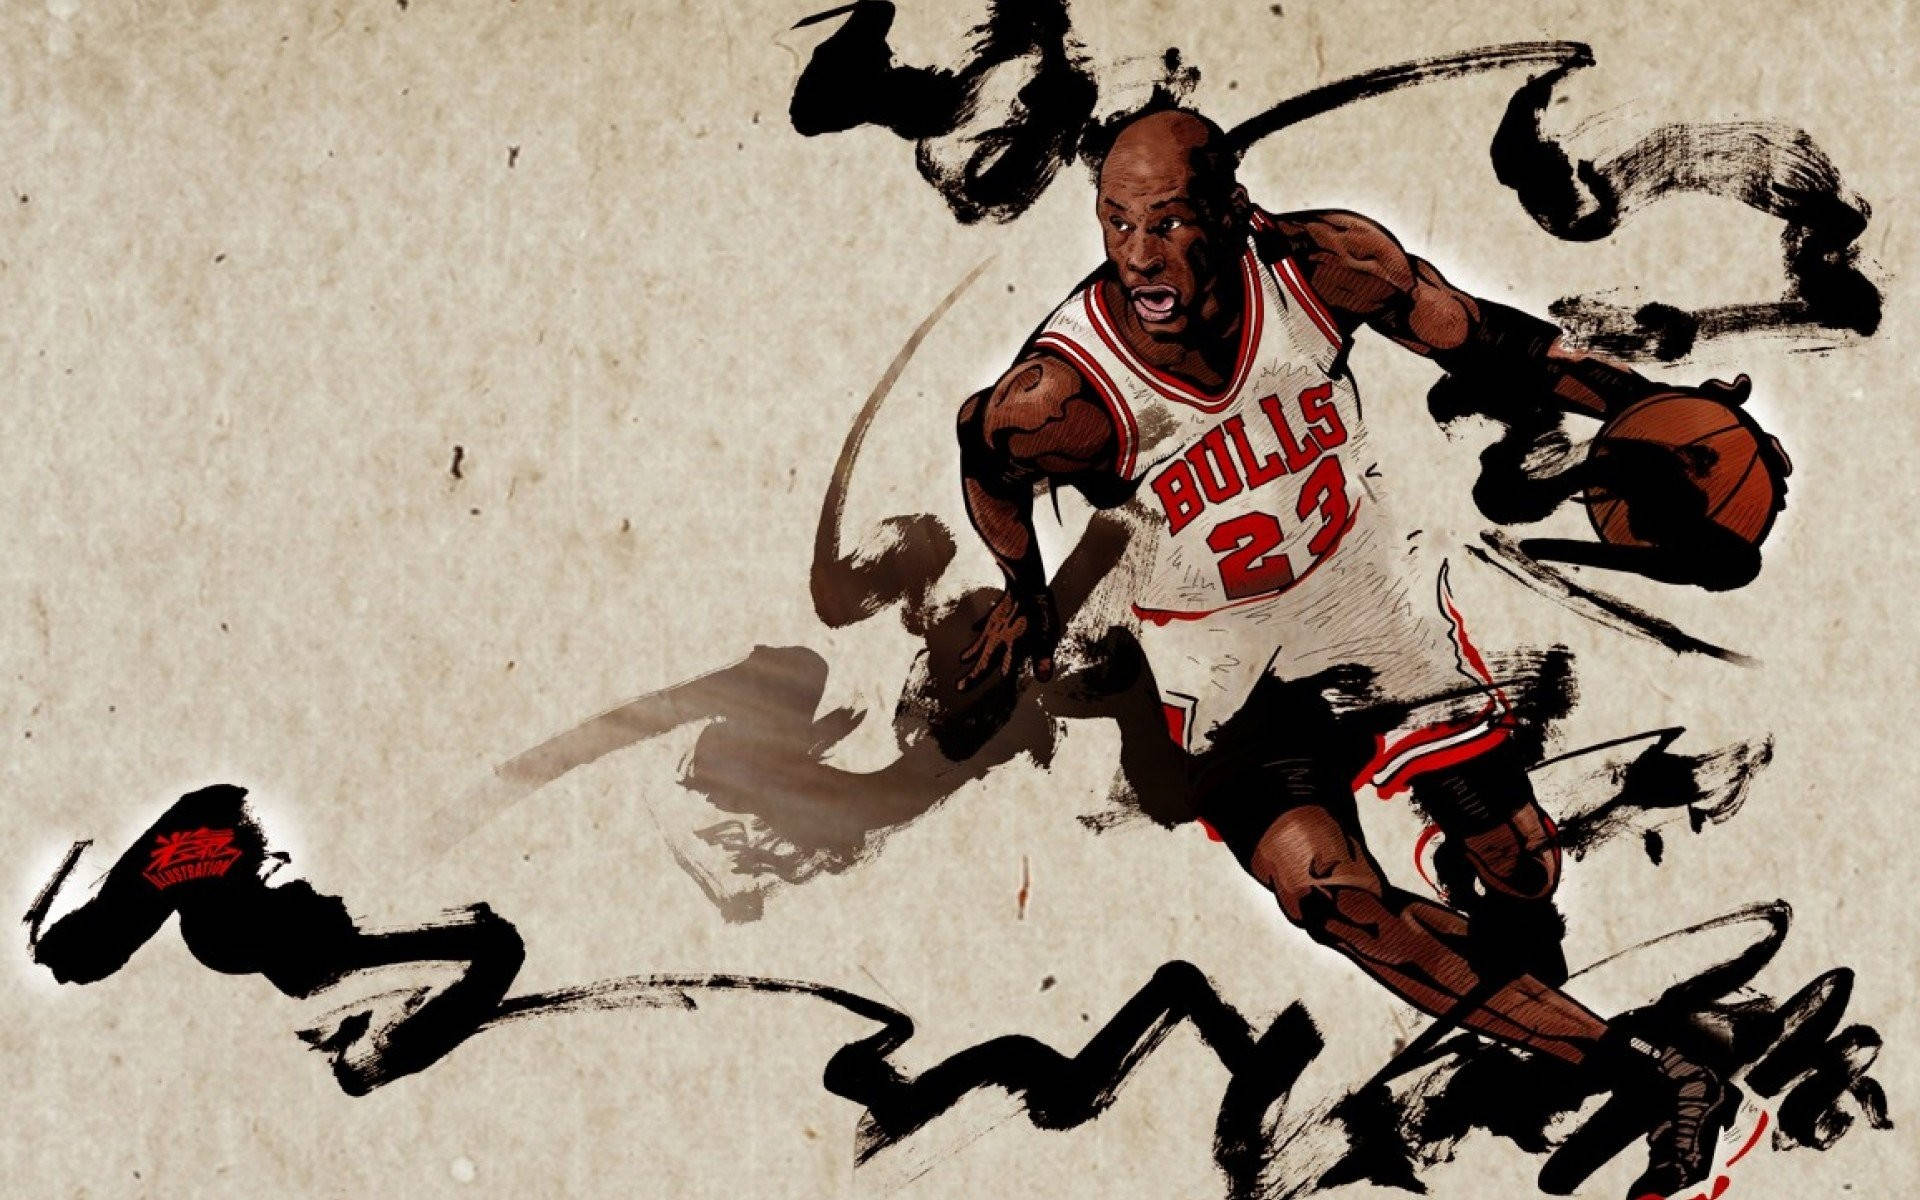 Michael Jordan 1920X1200 Wallpaper and Background Image